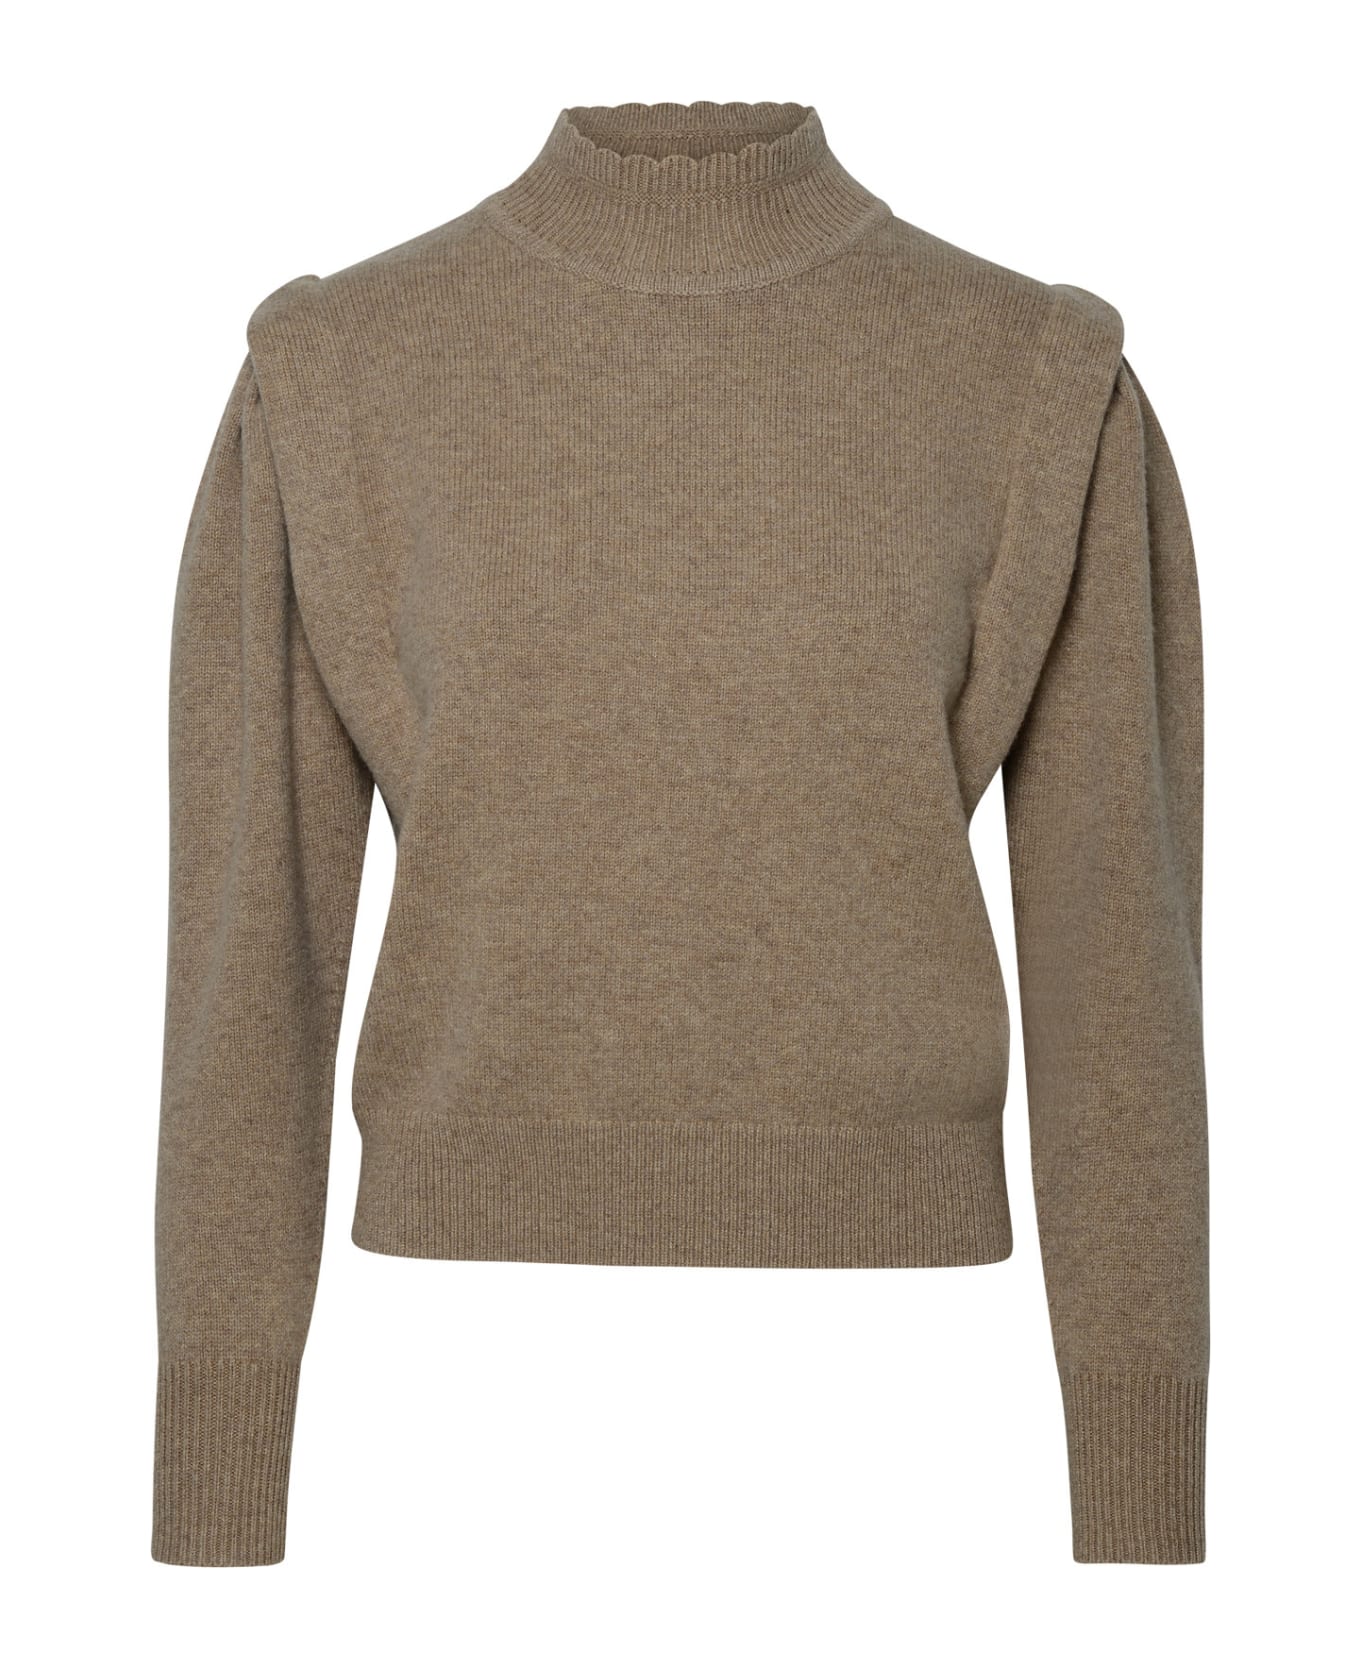 Marant Étoile 'lucile' Beige Wool Turtleneck Sweater - Beige